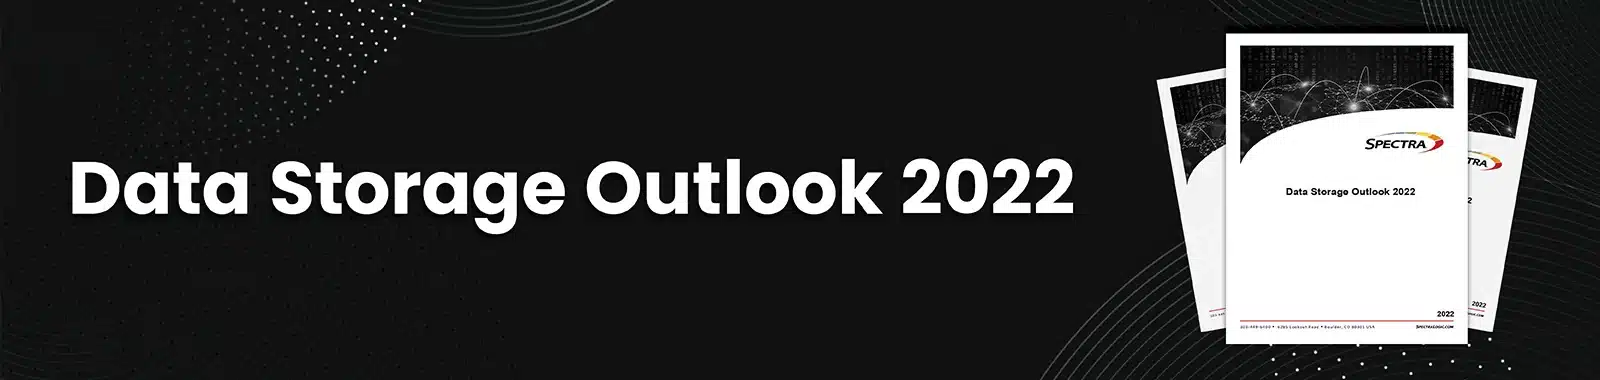 Data Storage Outlook 2022